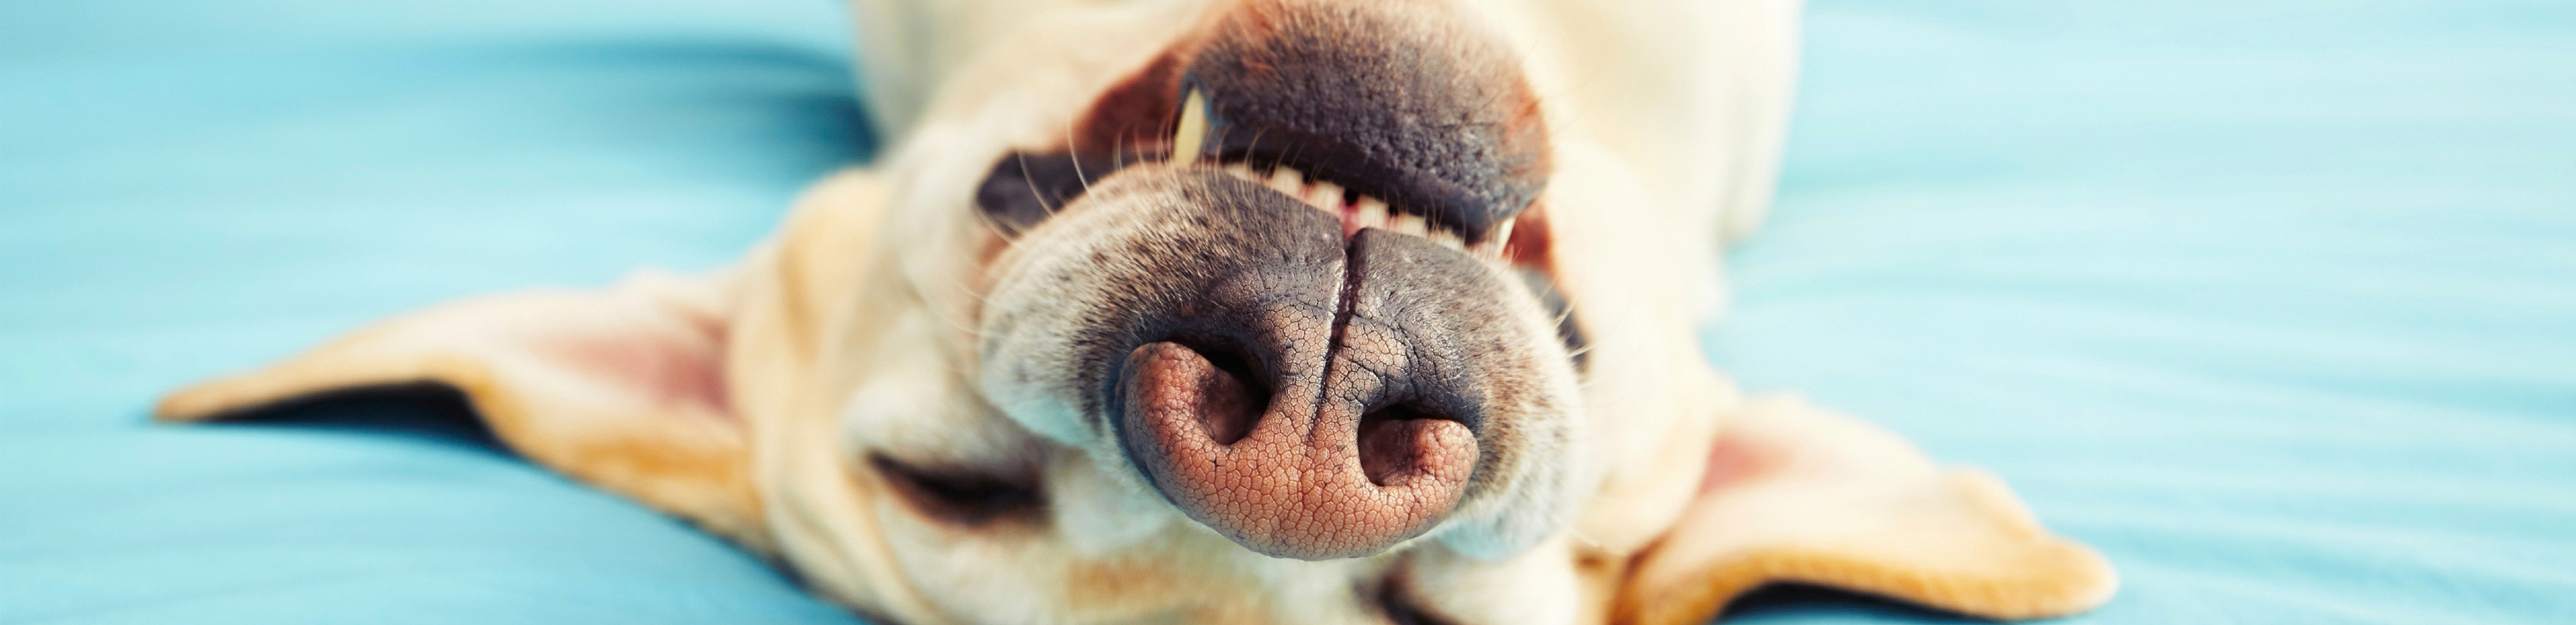 Dog orthodontic pet care